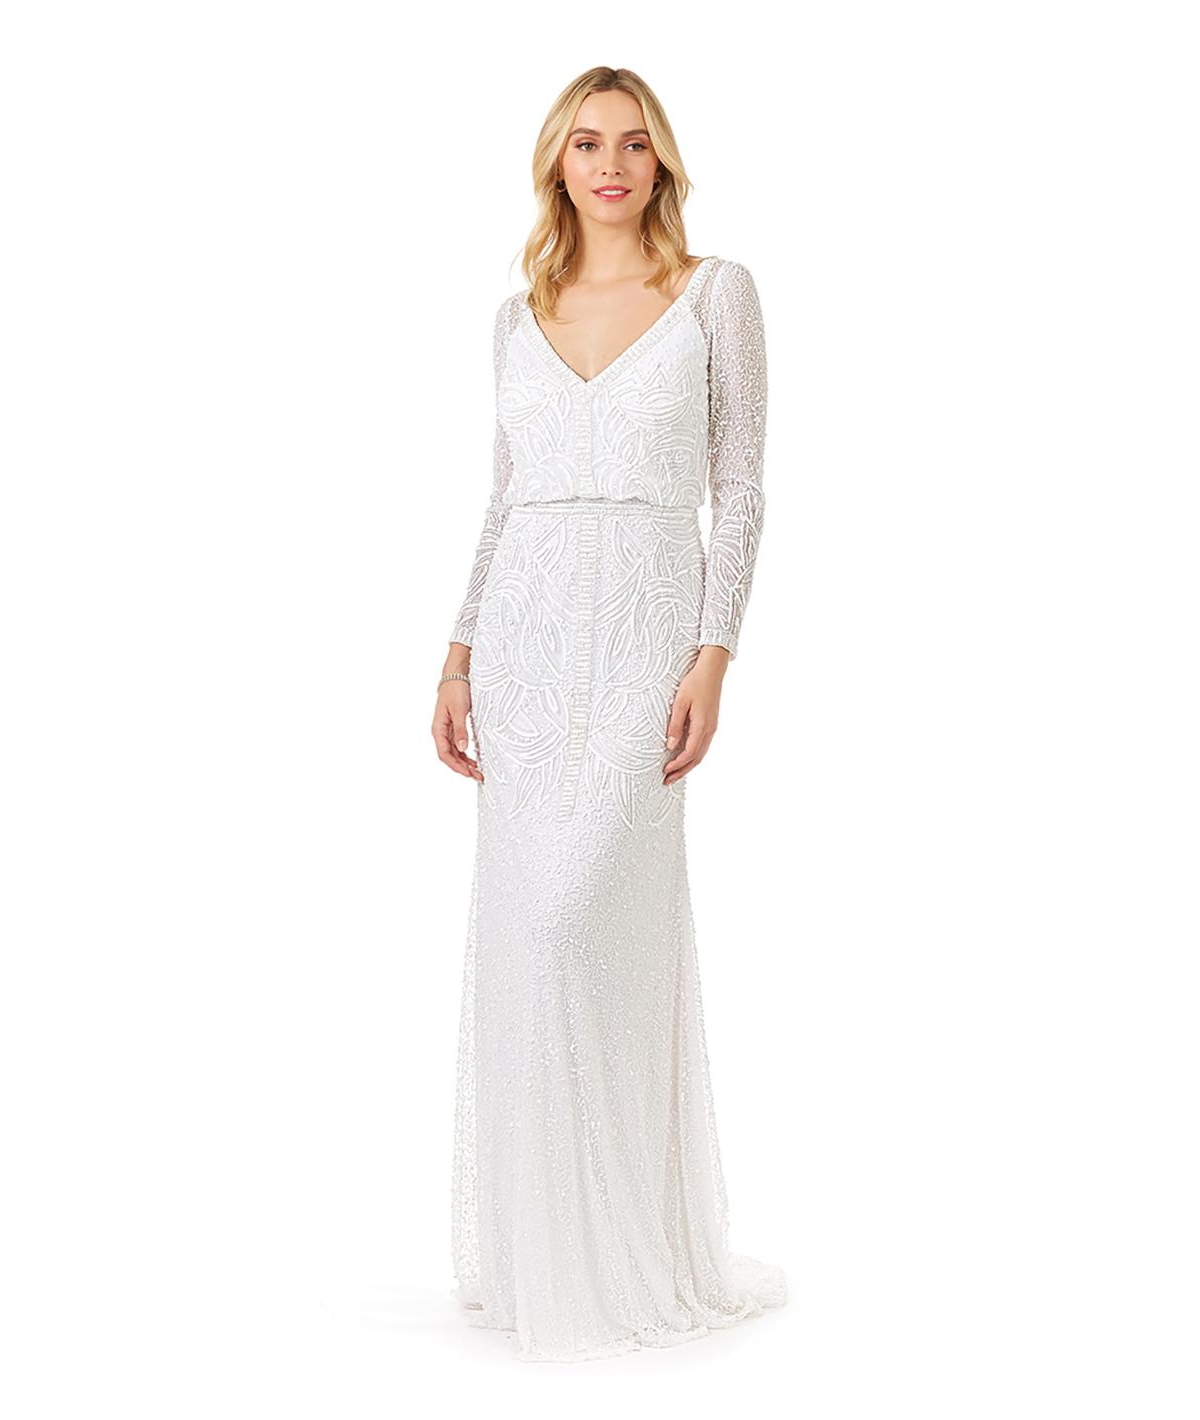 Women's Grant Long Sleeve Beaded Wedding Dress - Ivory